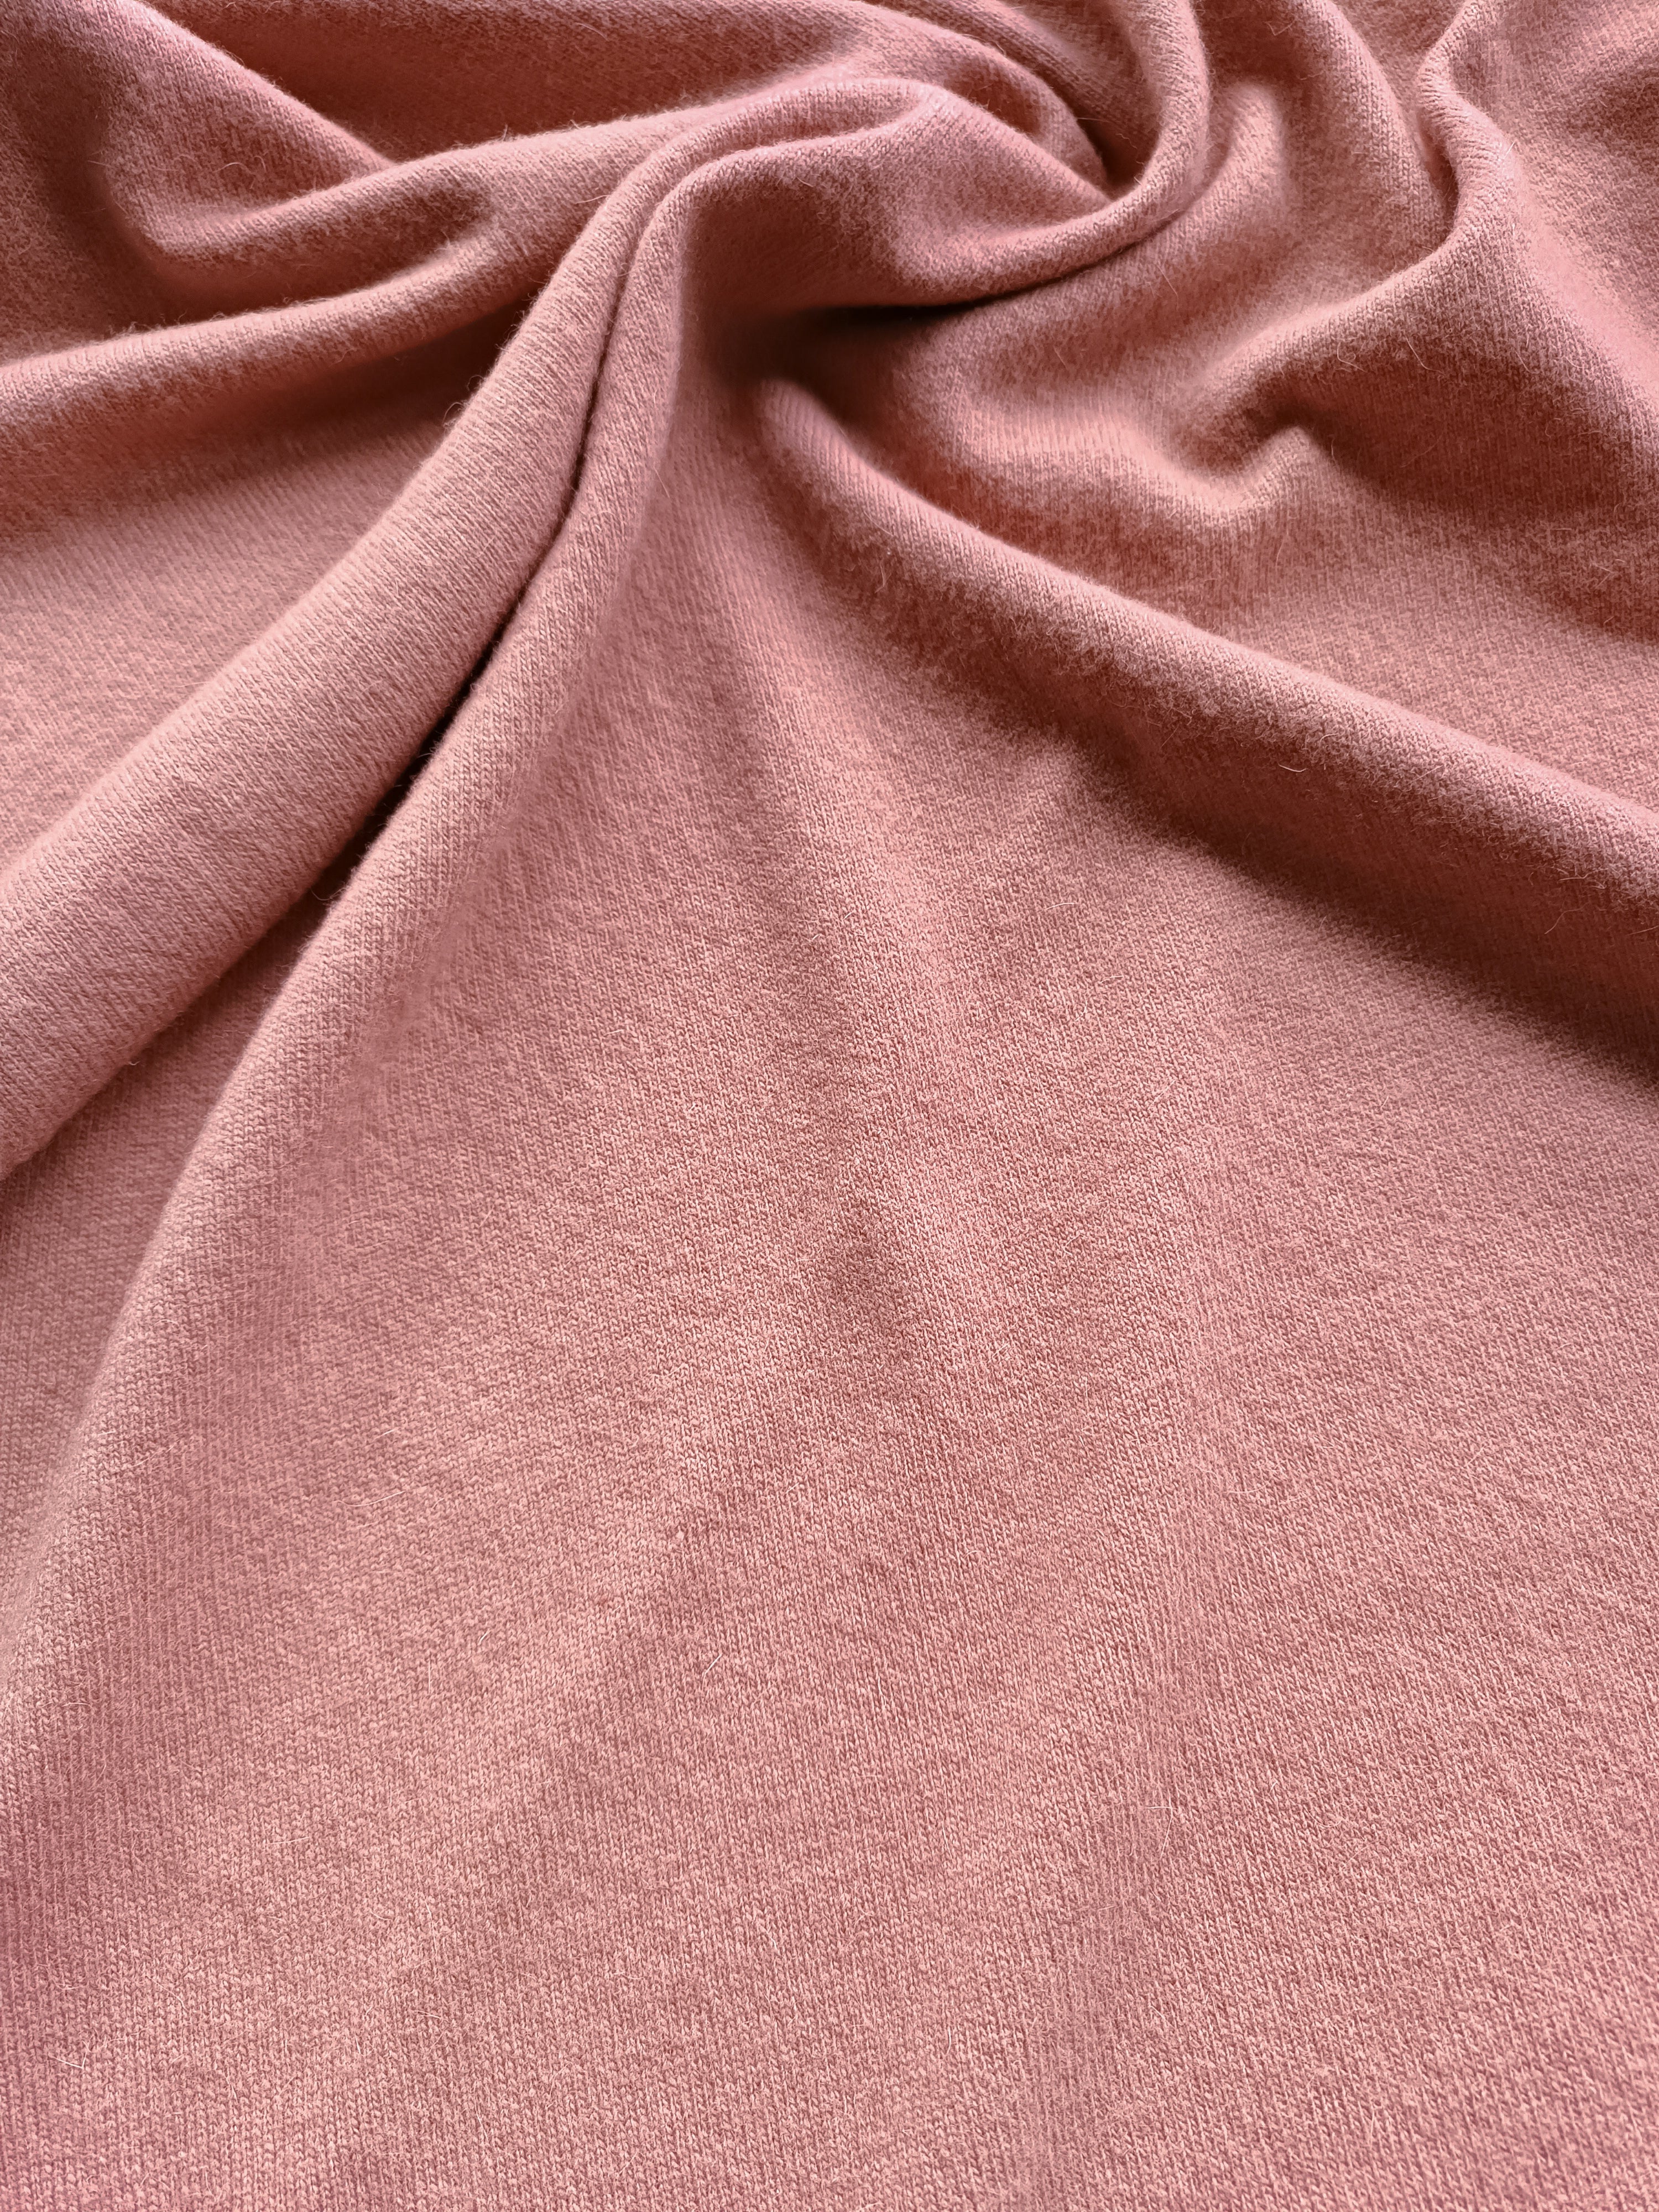 No. 442 wool knit dusky pink